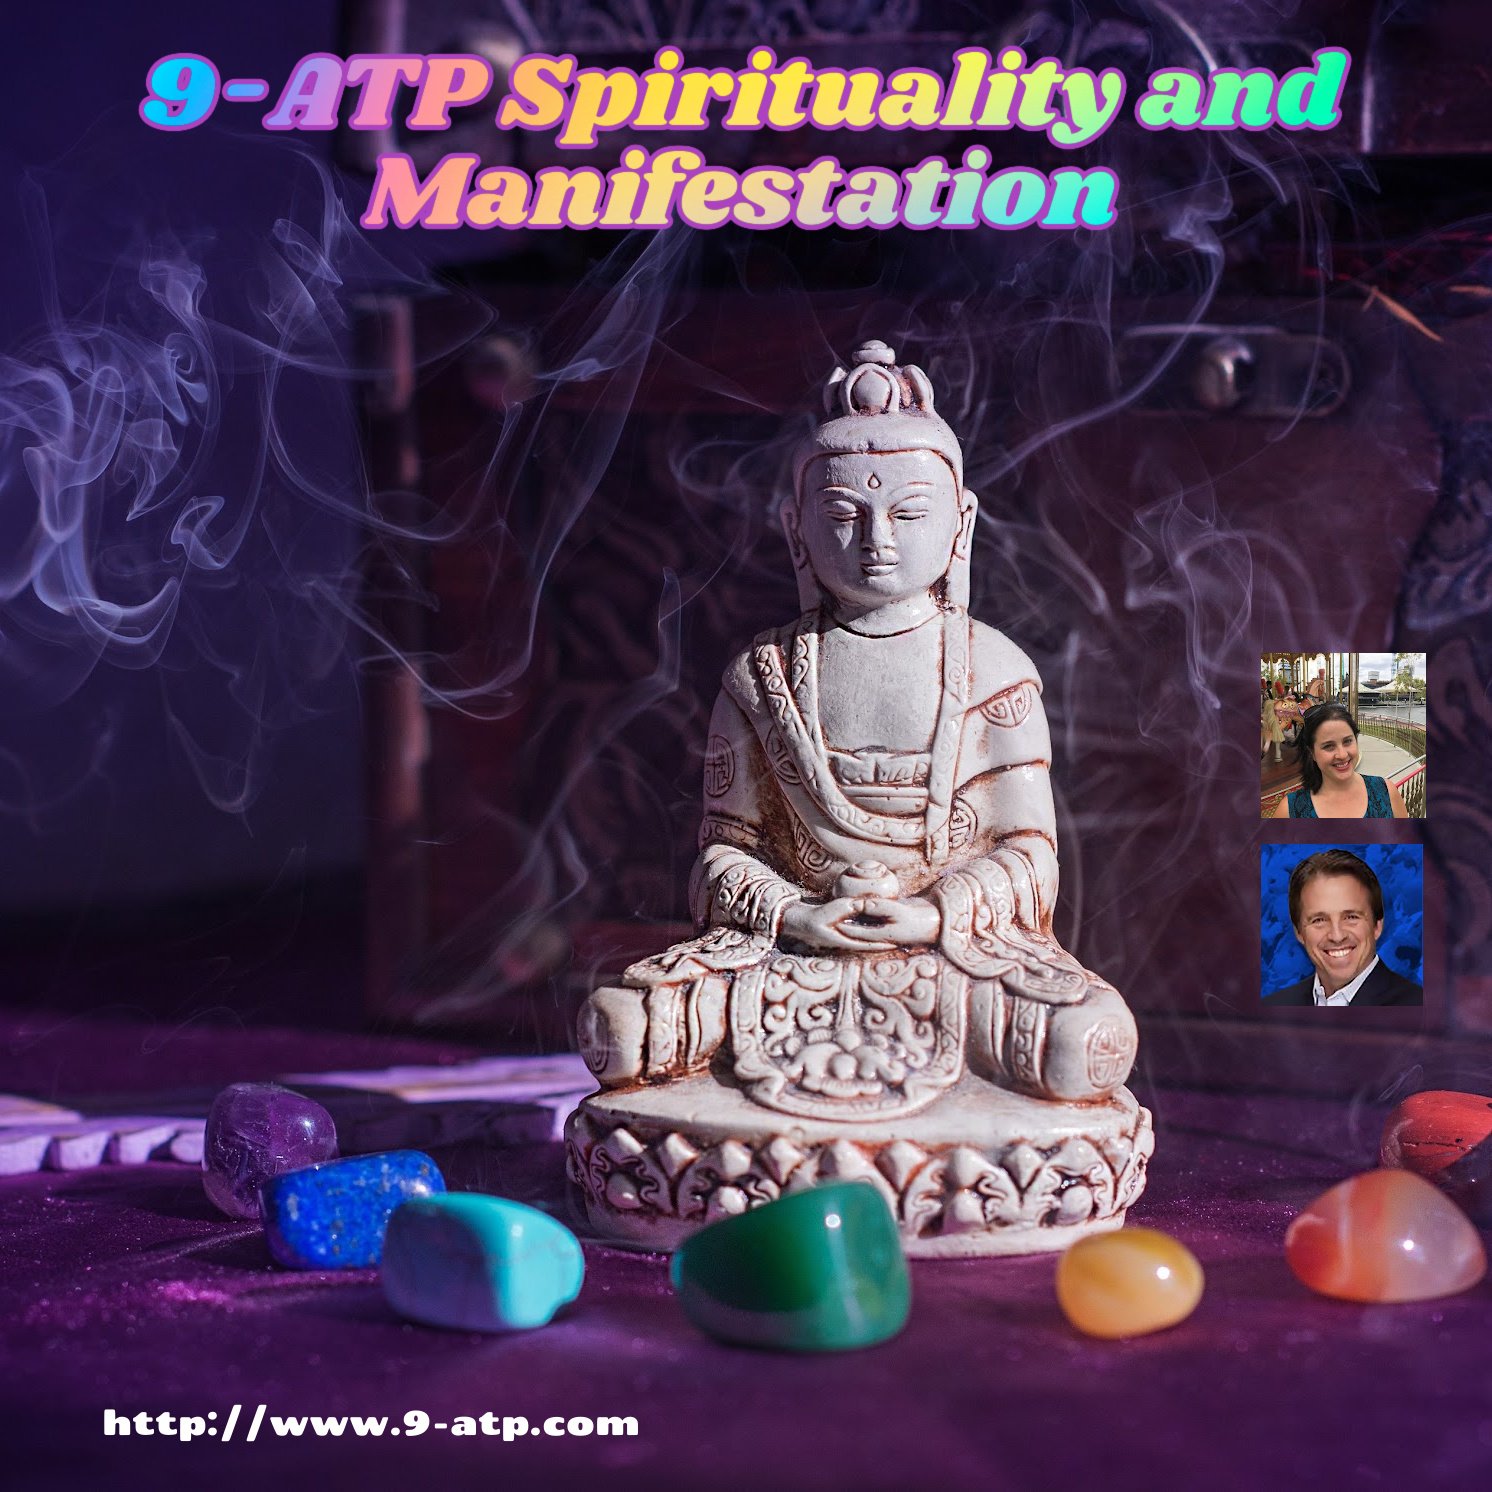 9-ATP Spirituality and Manifestation